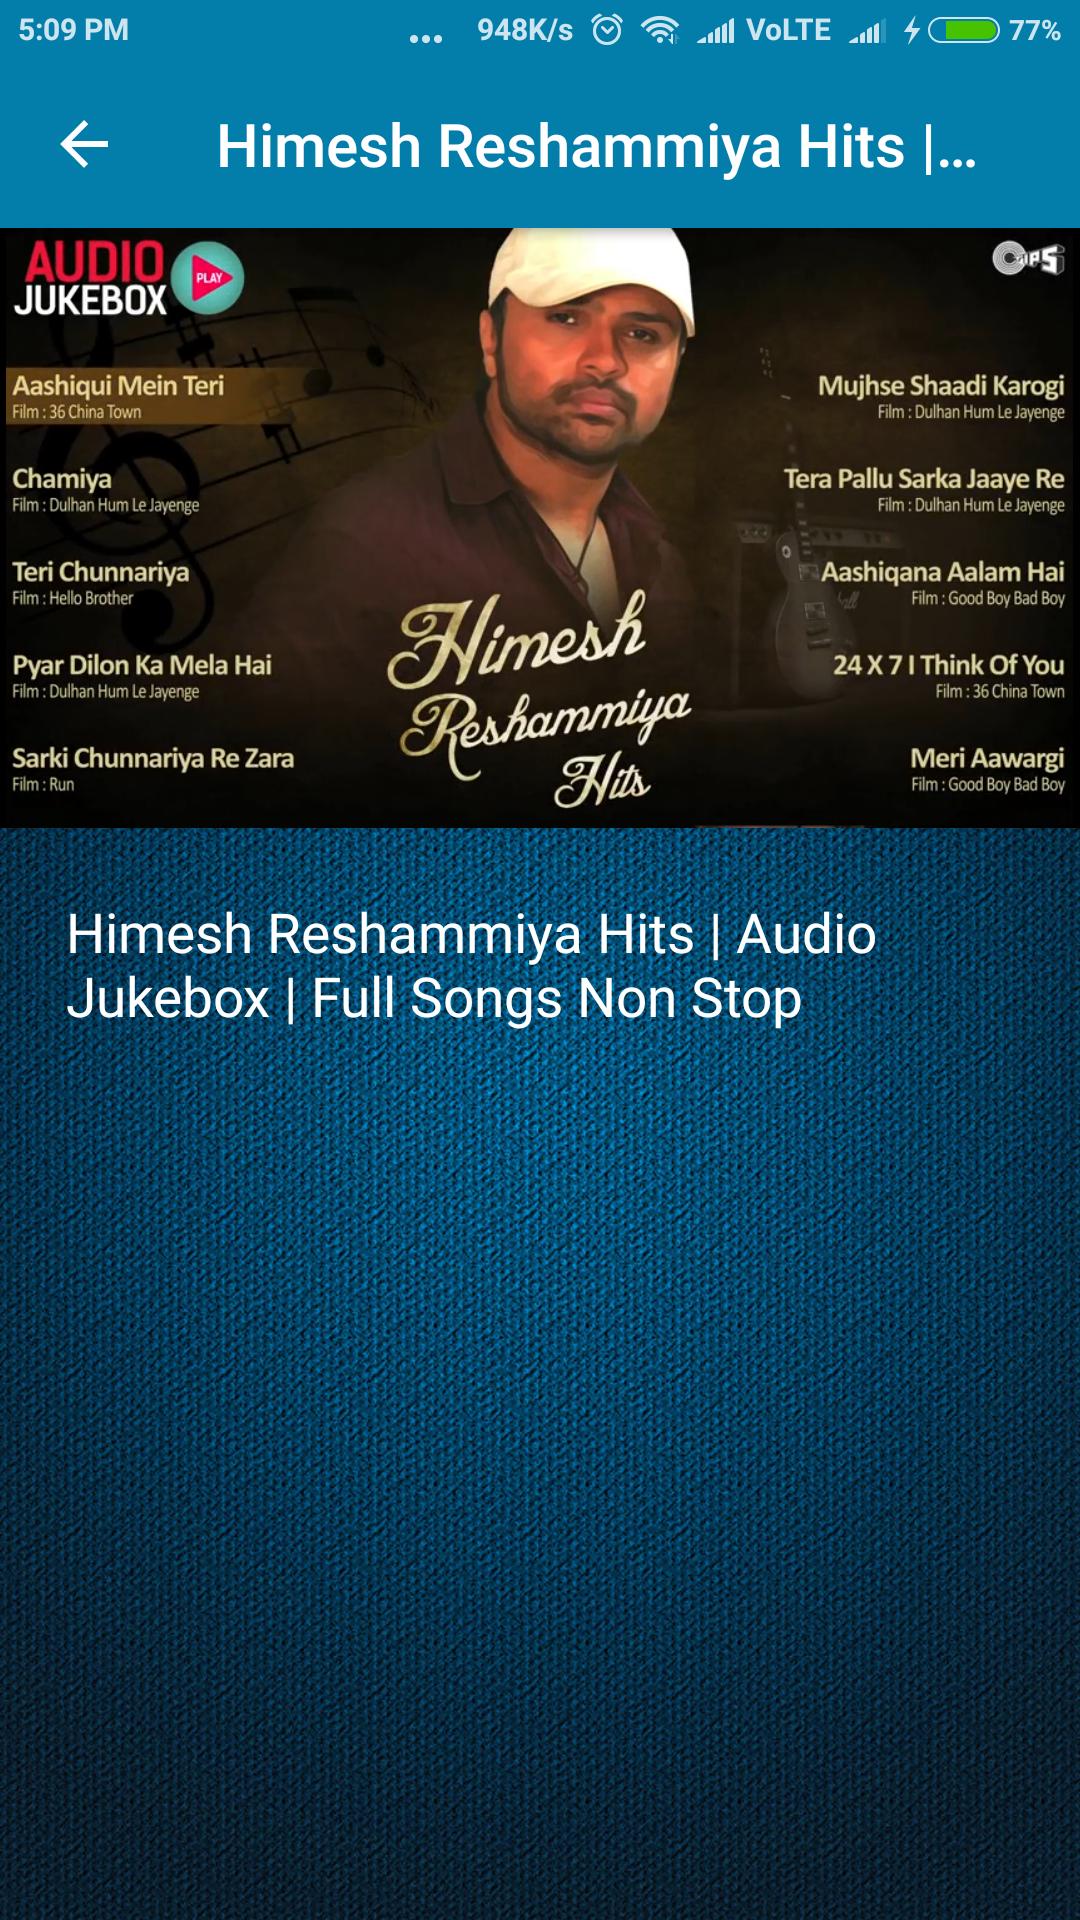 Himesh Reshammiya Hit Songs pour Android - Téléchargez l'APK